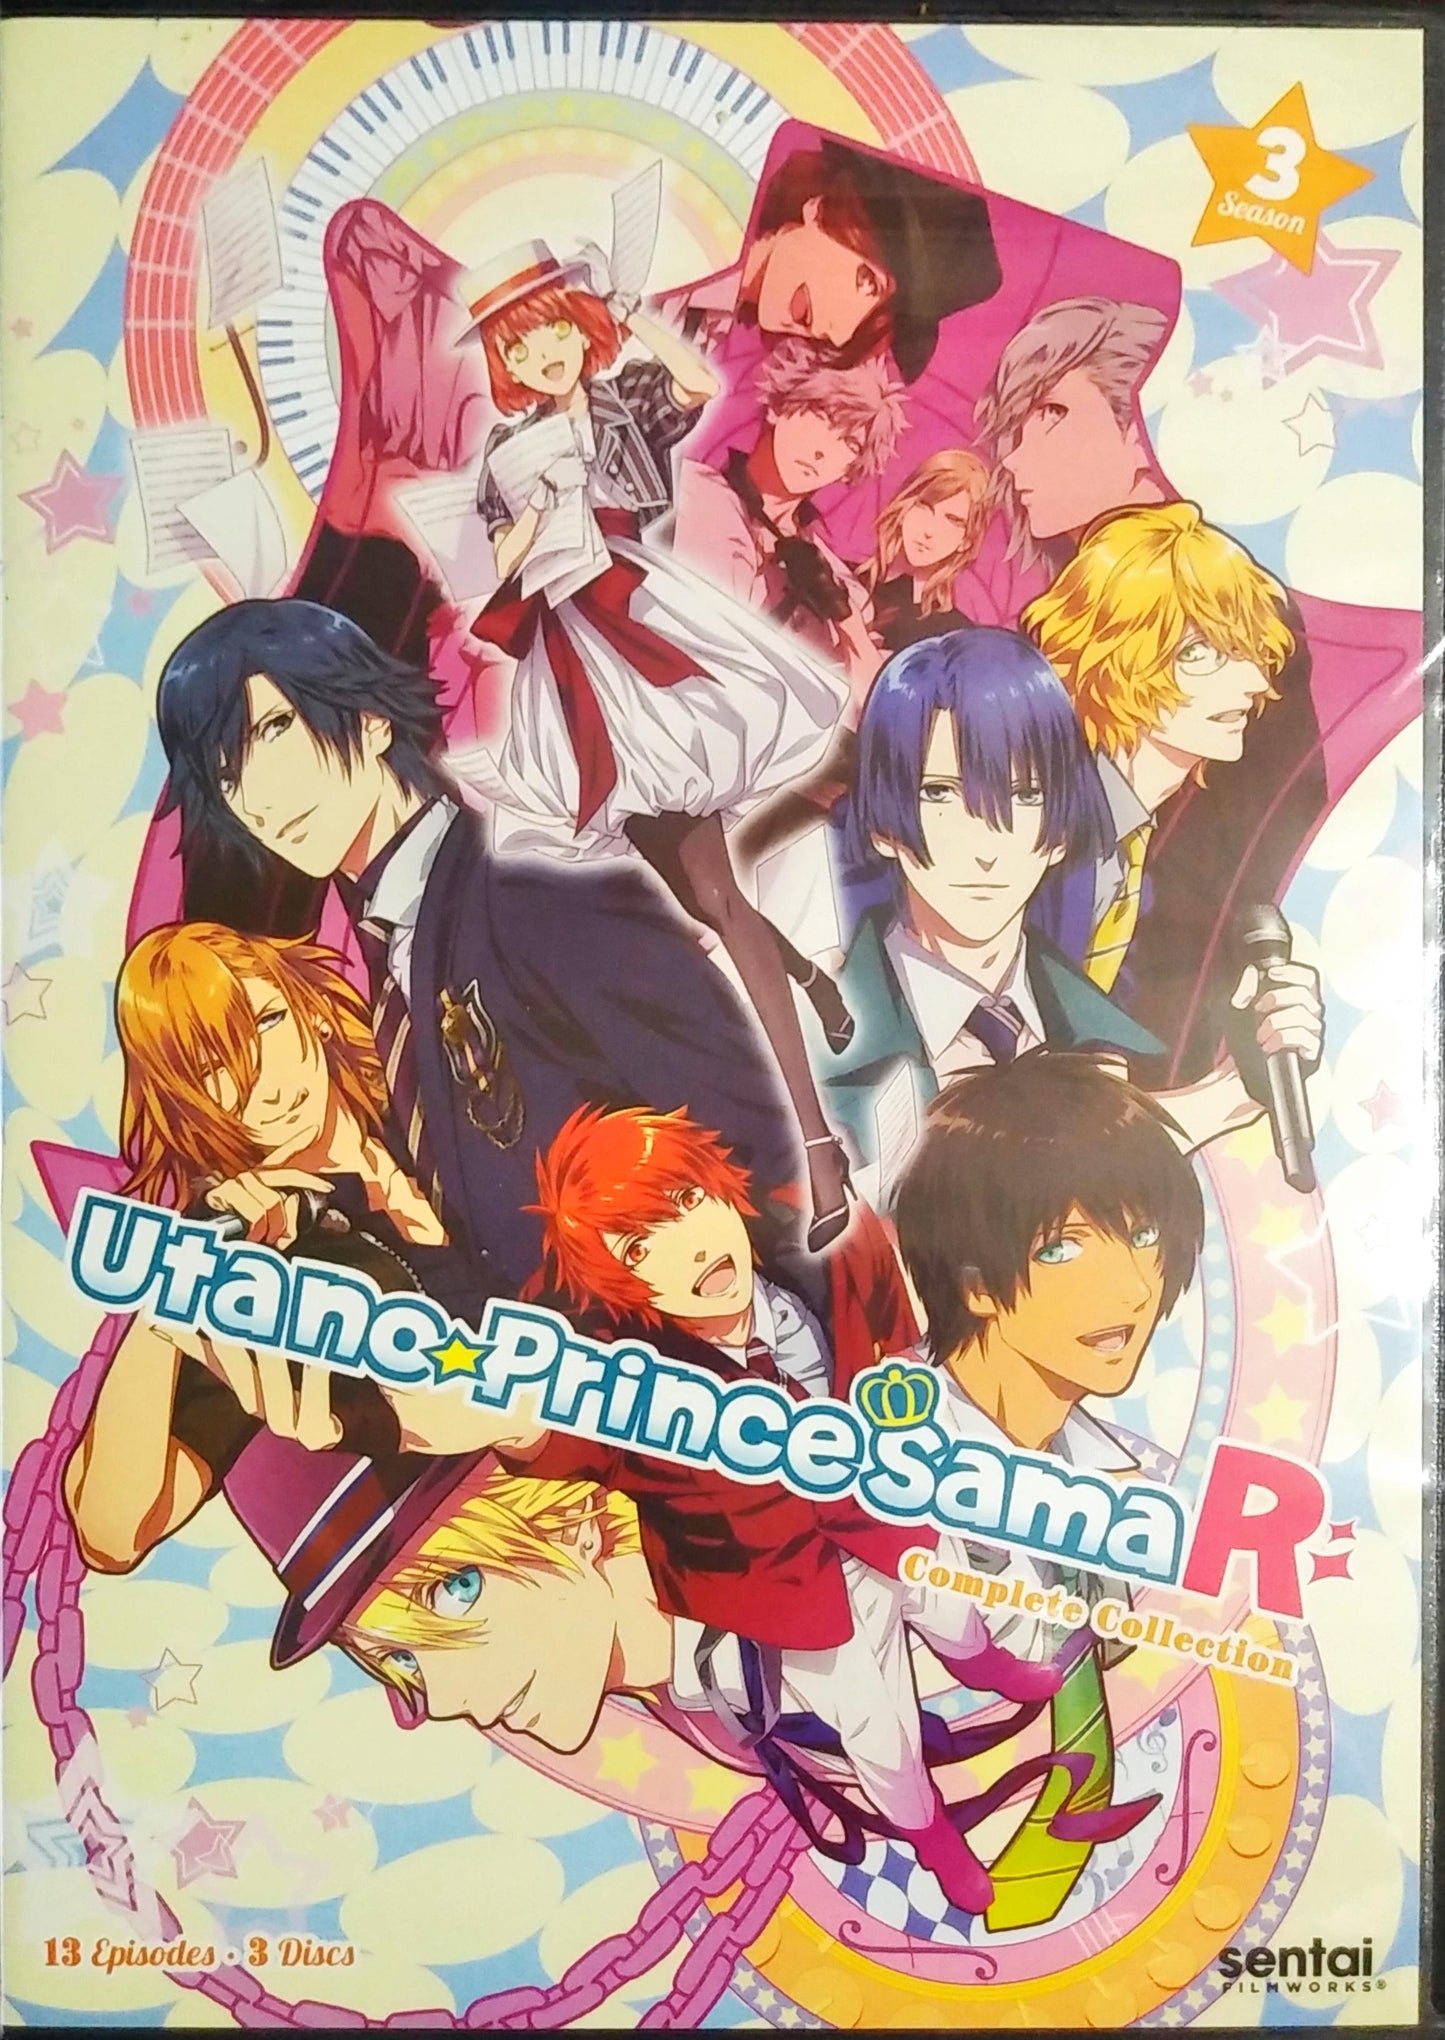 Uta no Prince-sama Revolutions! Season 3 DVD Complete Collection Sealed